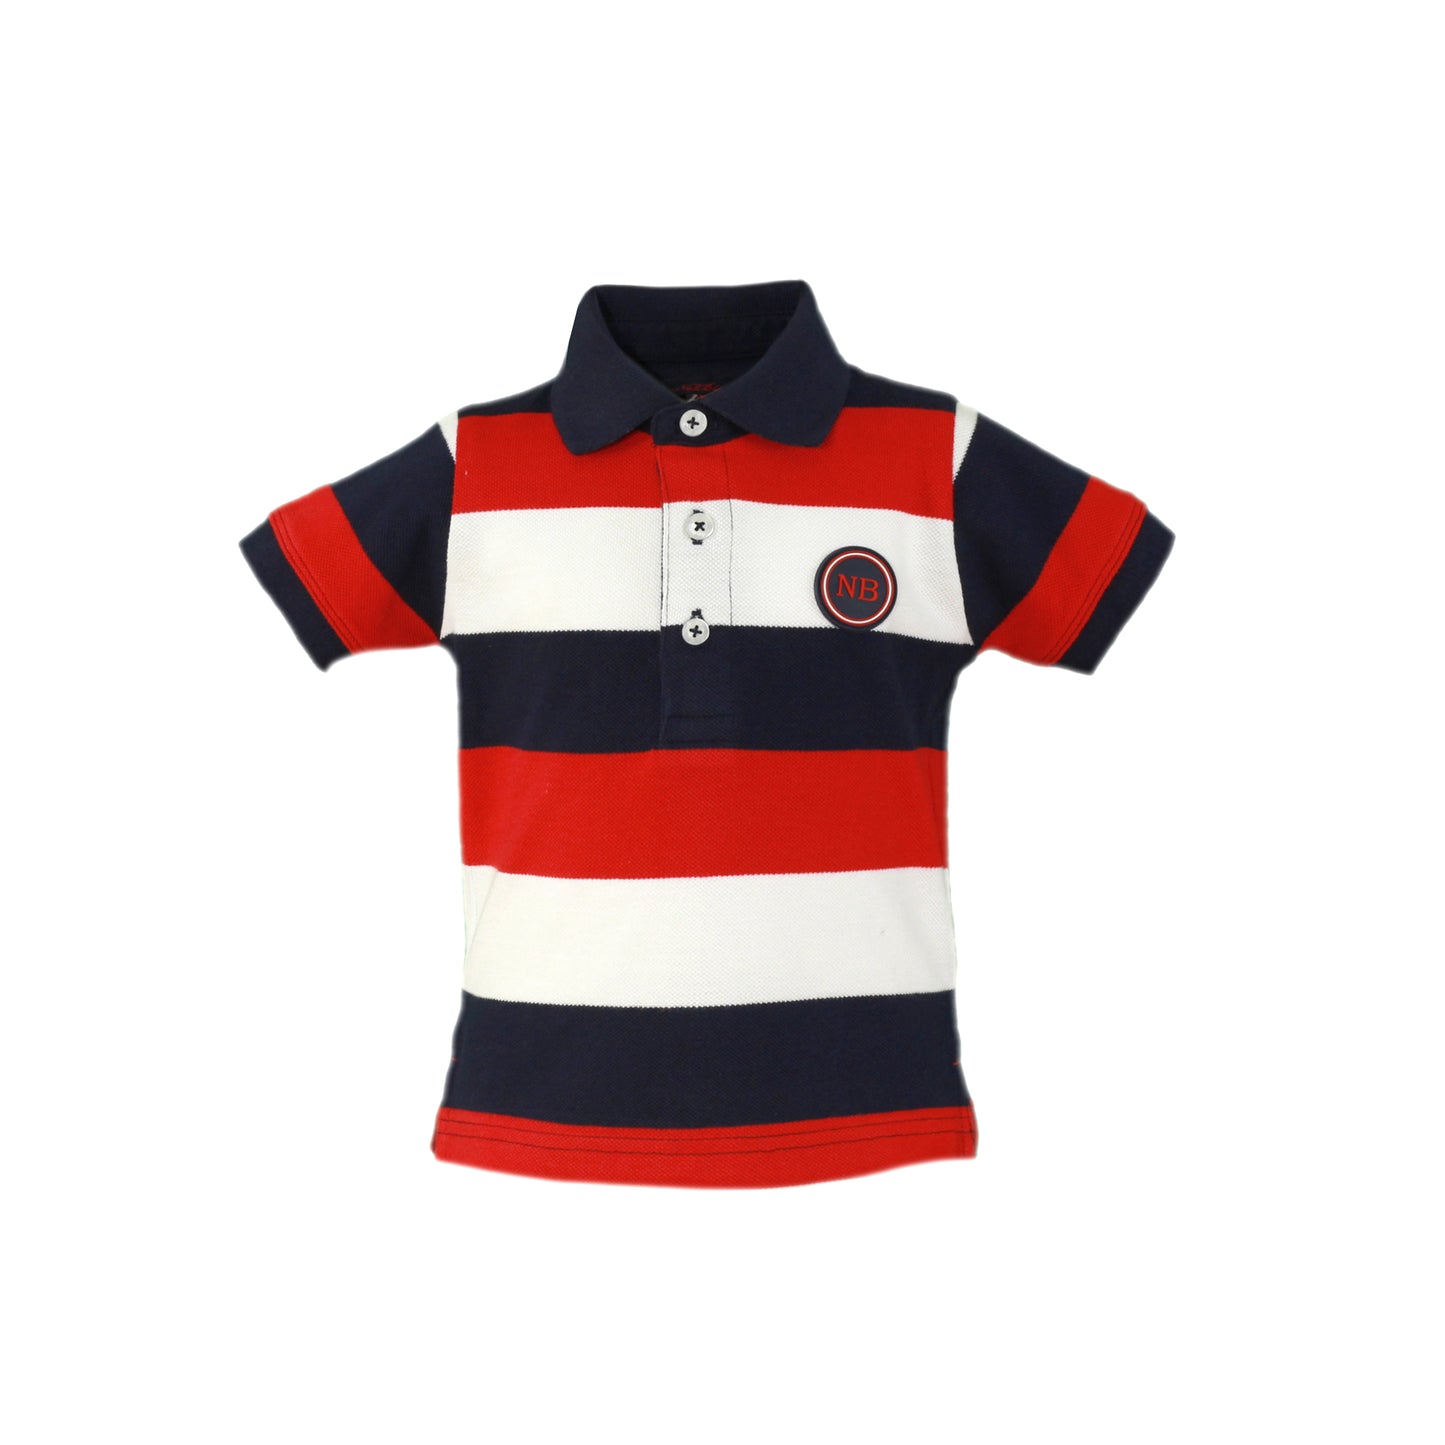 SS23 MIRANDA NEL BLU Navy & Red Stripe Baby Boys Polo Shirt - 1100